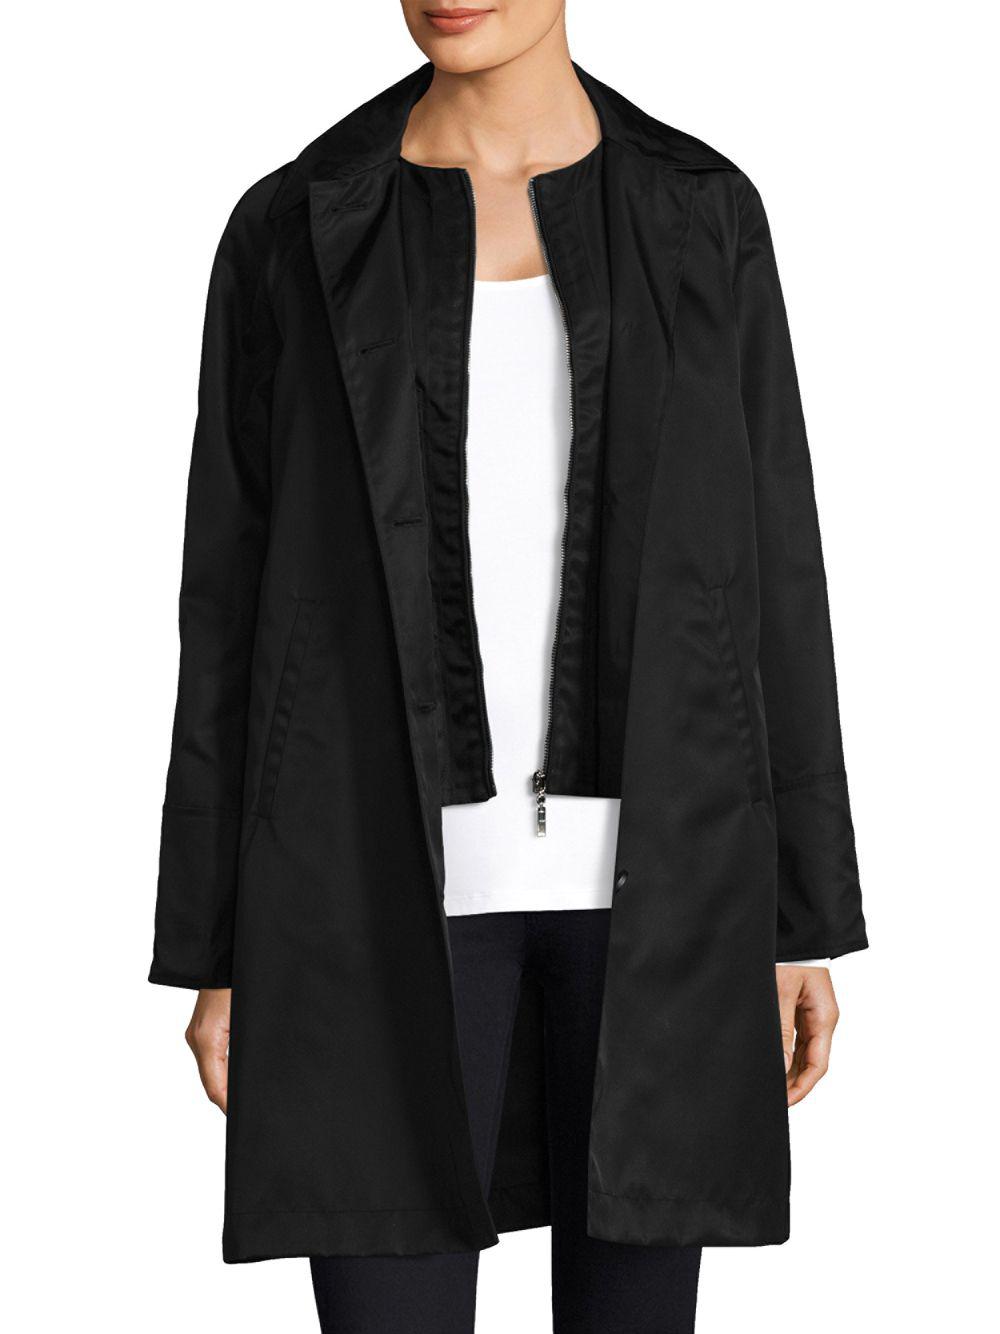 Download Jane Post Synthetic Mock Double Look Raincoat in Black - Lyst